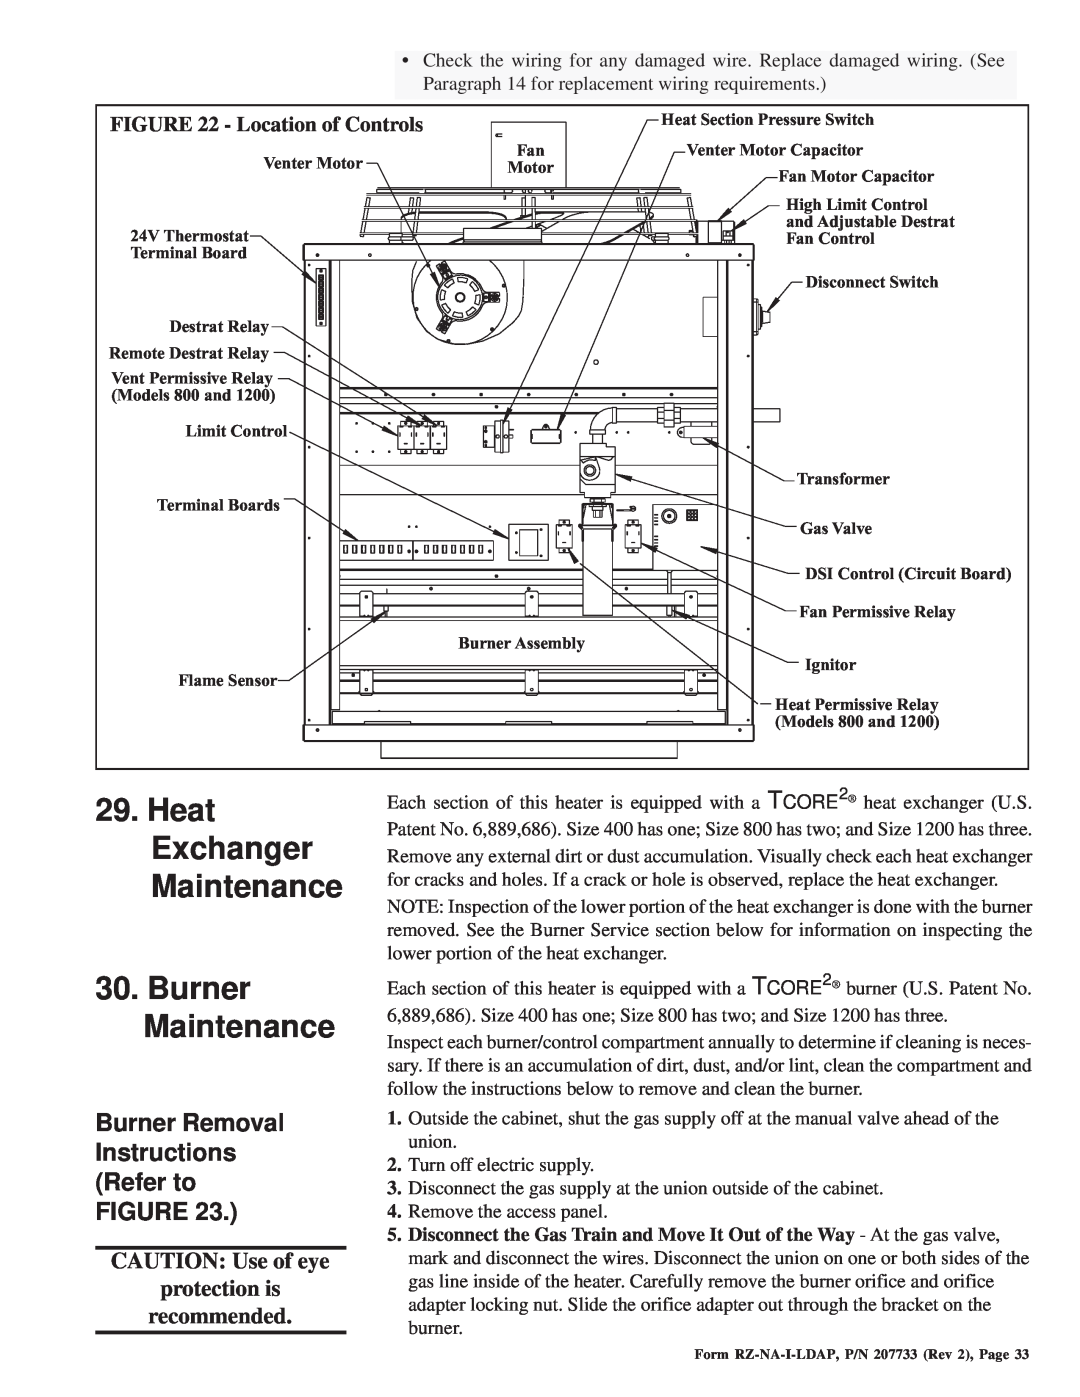 Thomas & Betts LDAP 1200 Heat Exchanger Maintenance, Burner Maintenance, Burner Removal Instructions Refer to FIGURE 